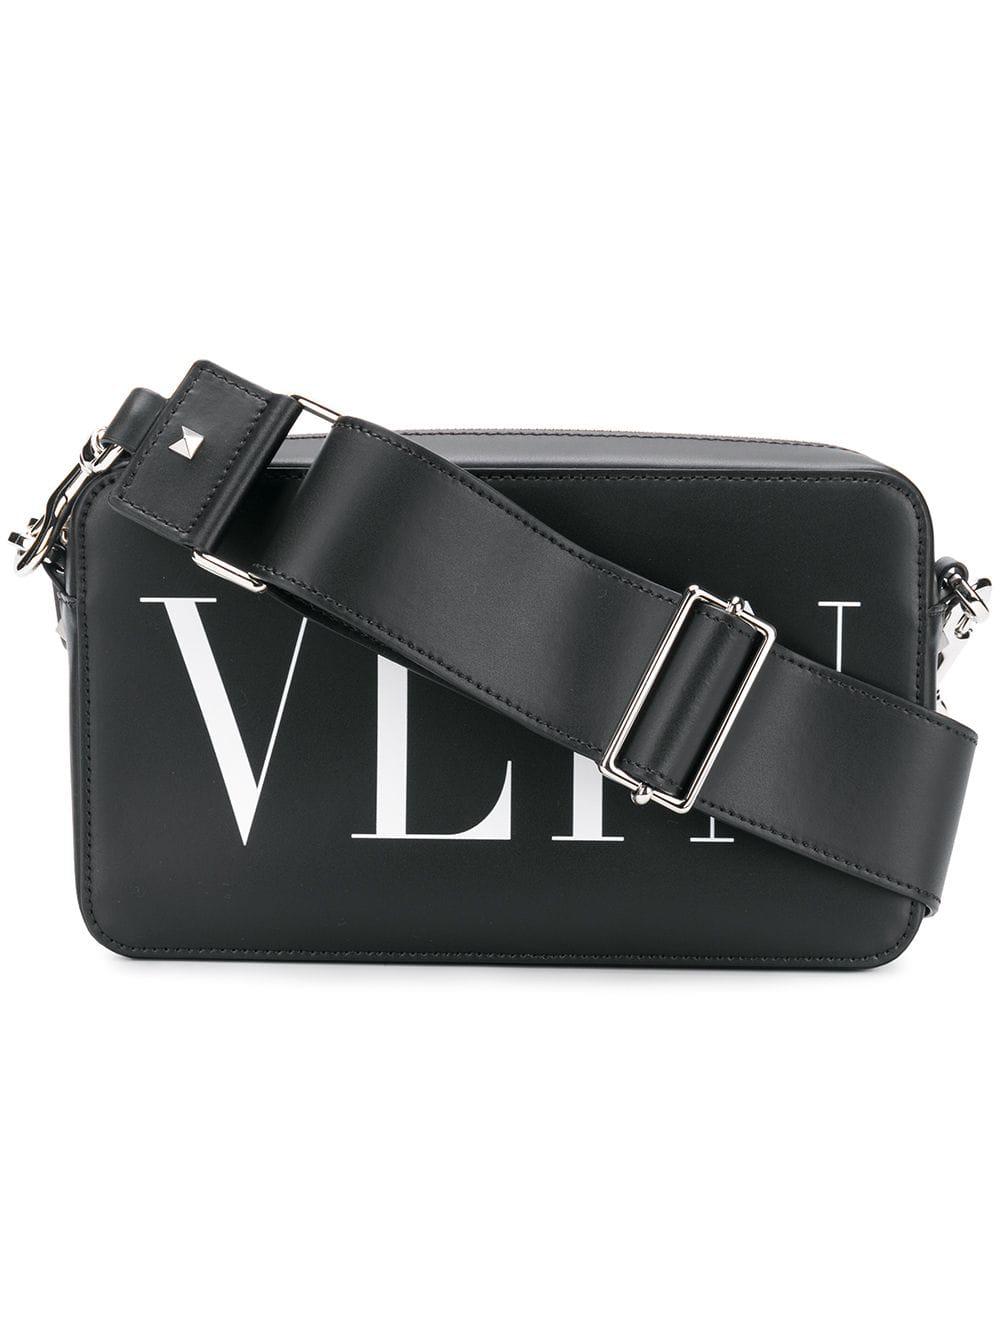 Valentino Vltn Cross Body Bag In Leather in Black for Men - Lyst